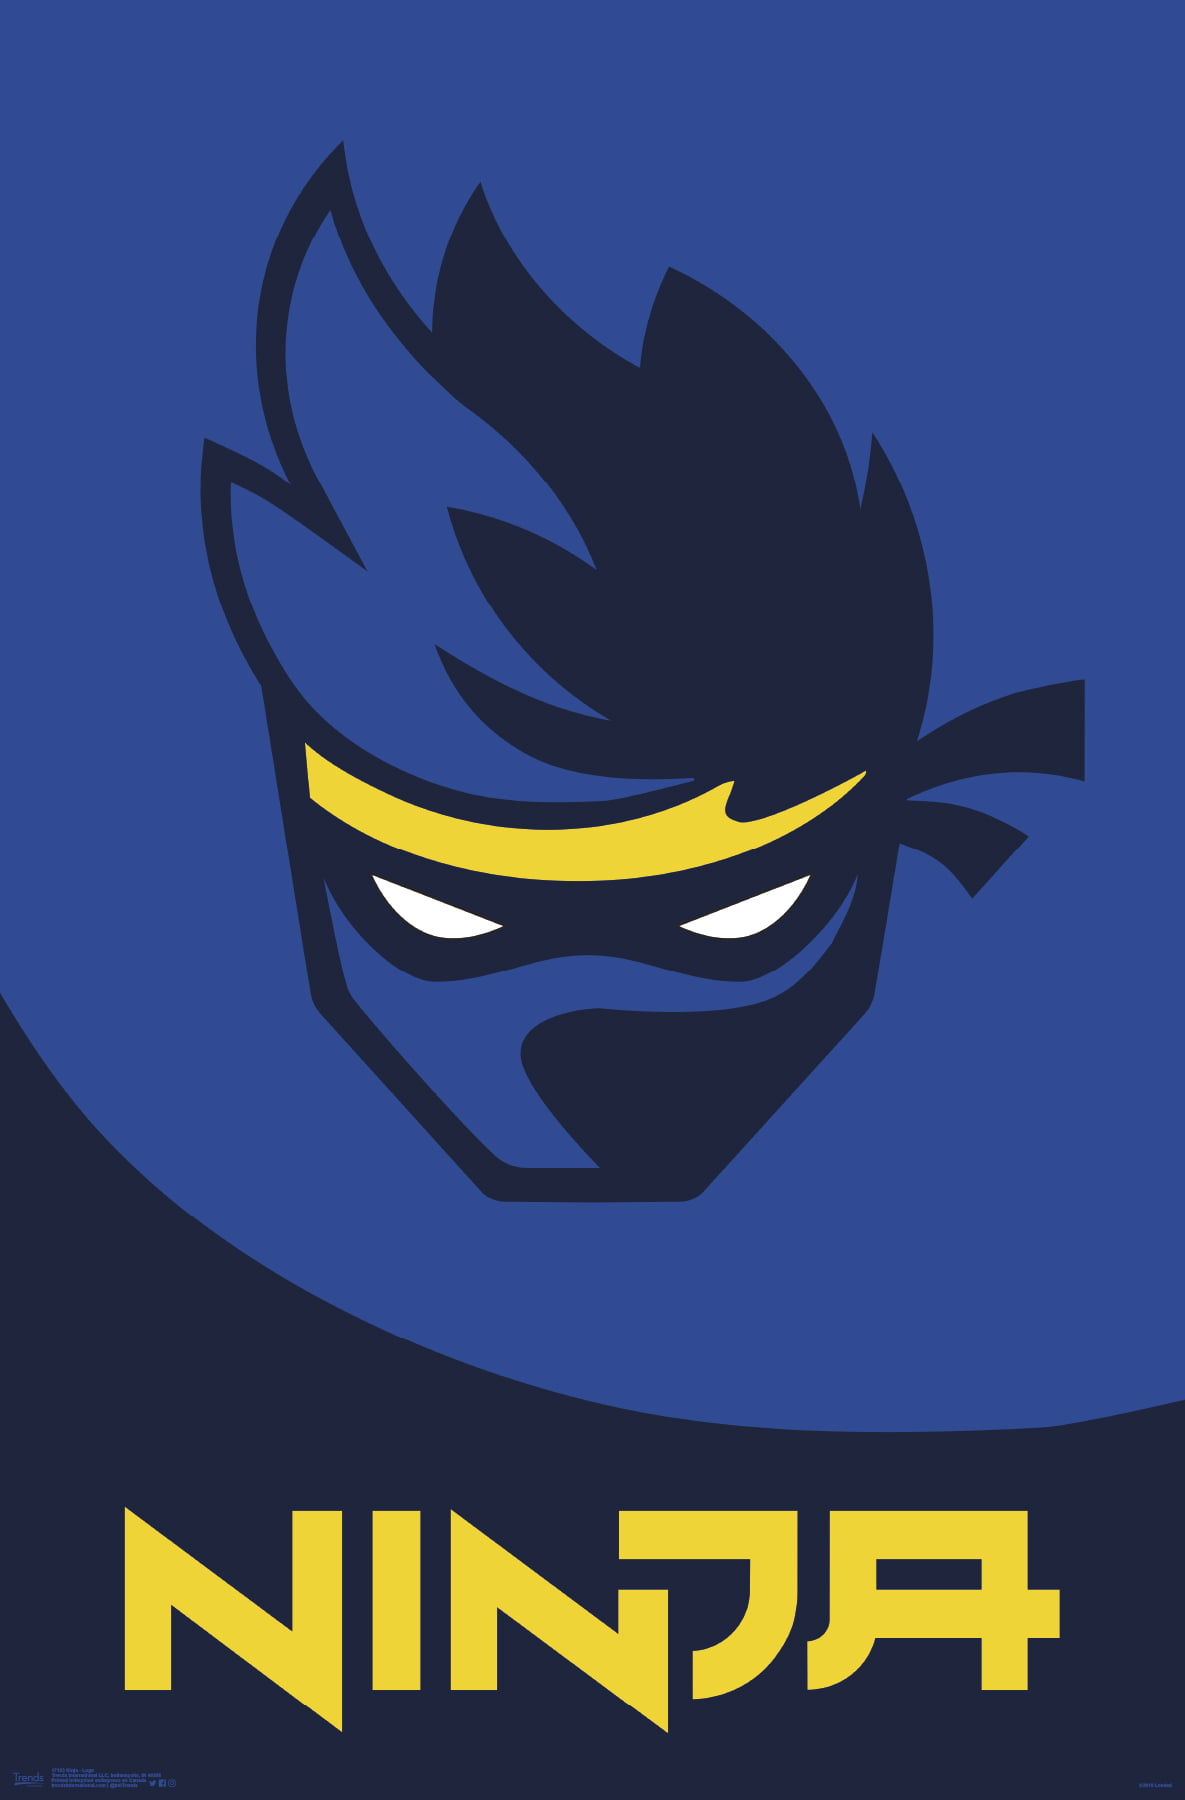 Ninja:. Free to use E-Gaming Logo by TheGermanCharizard on DeviantArt